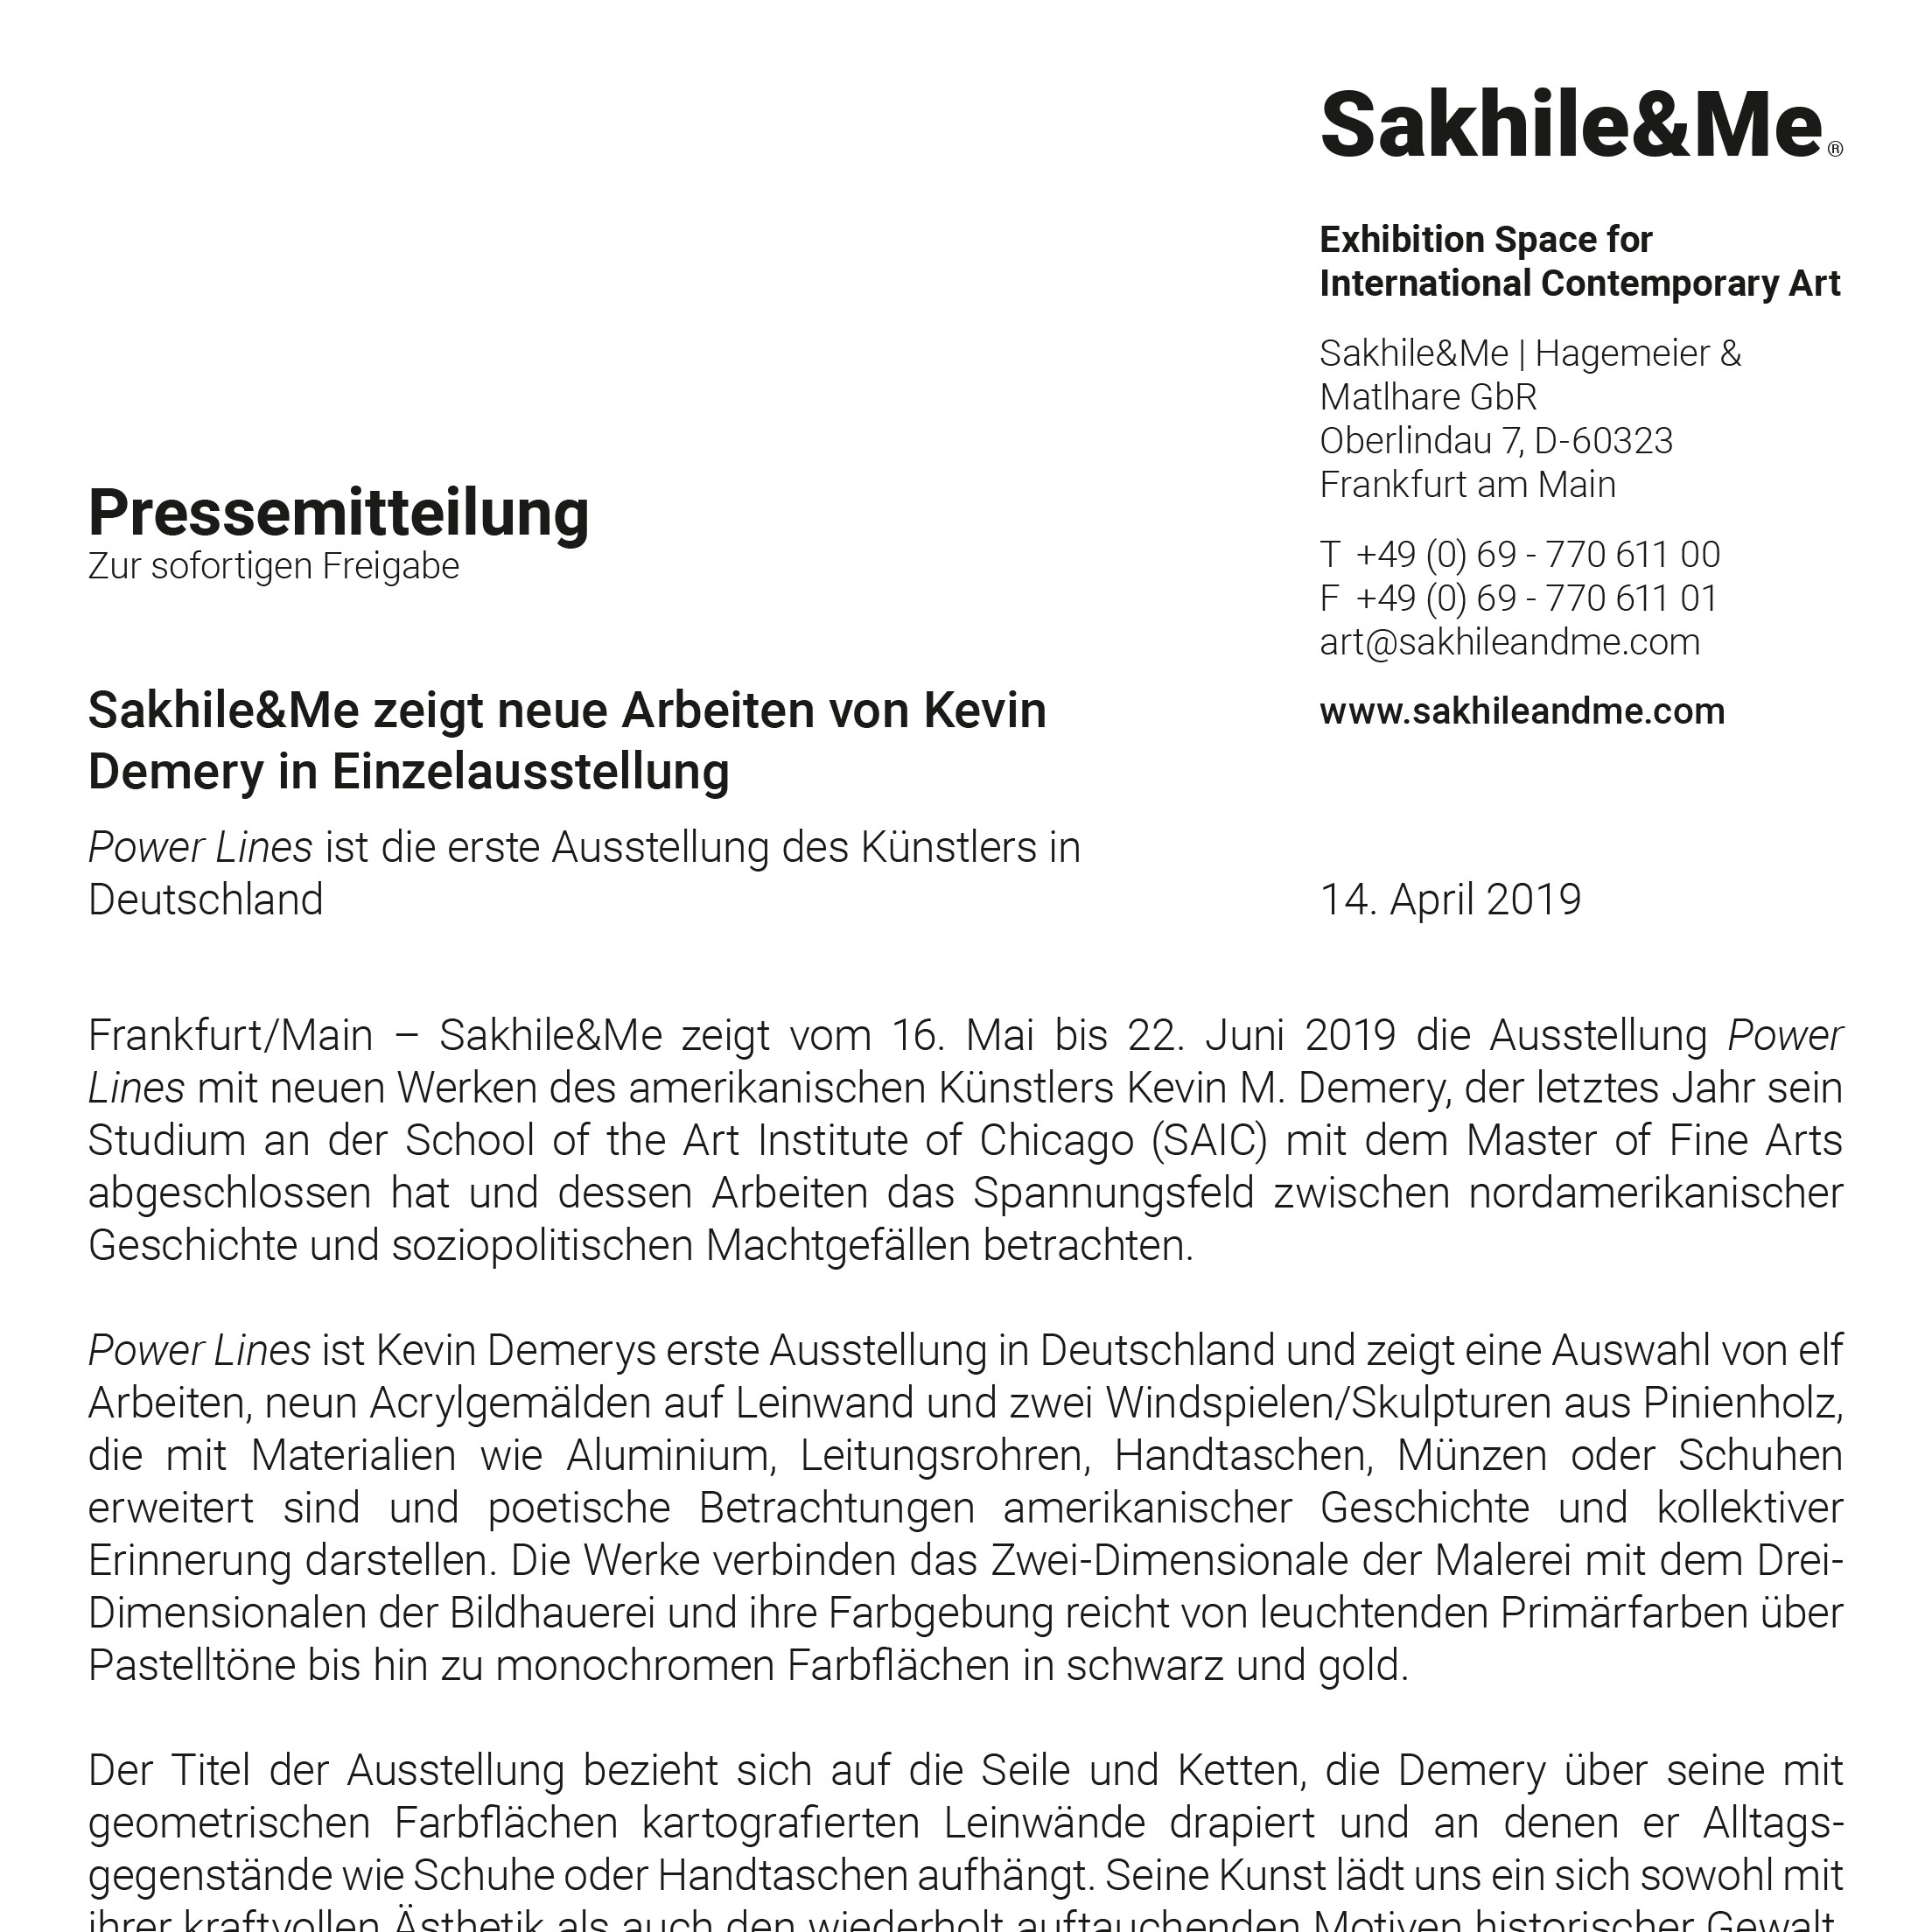 Press release (German)